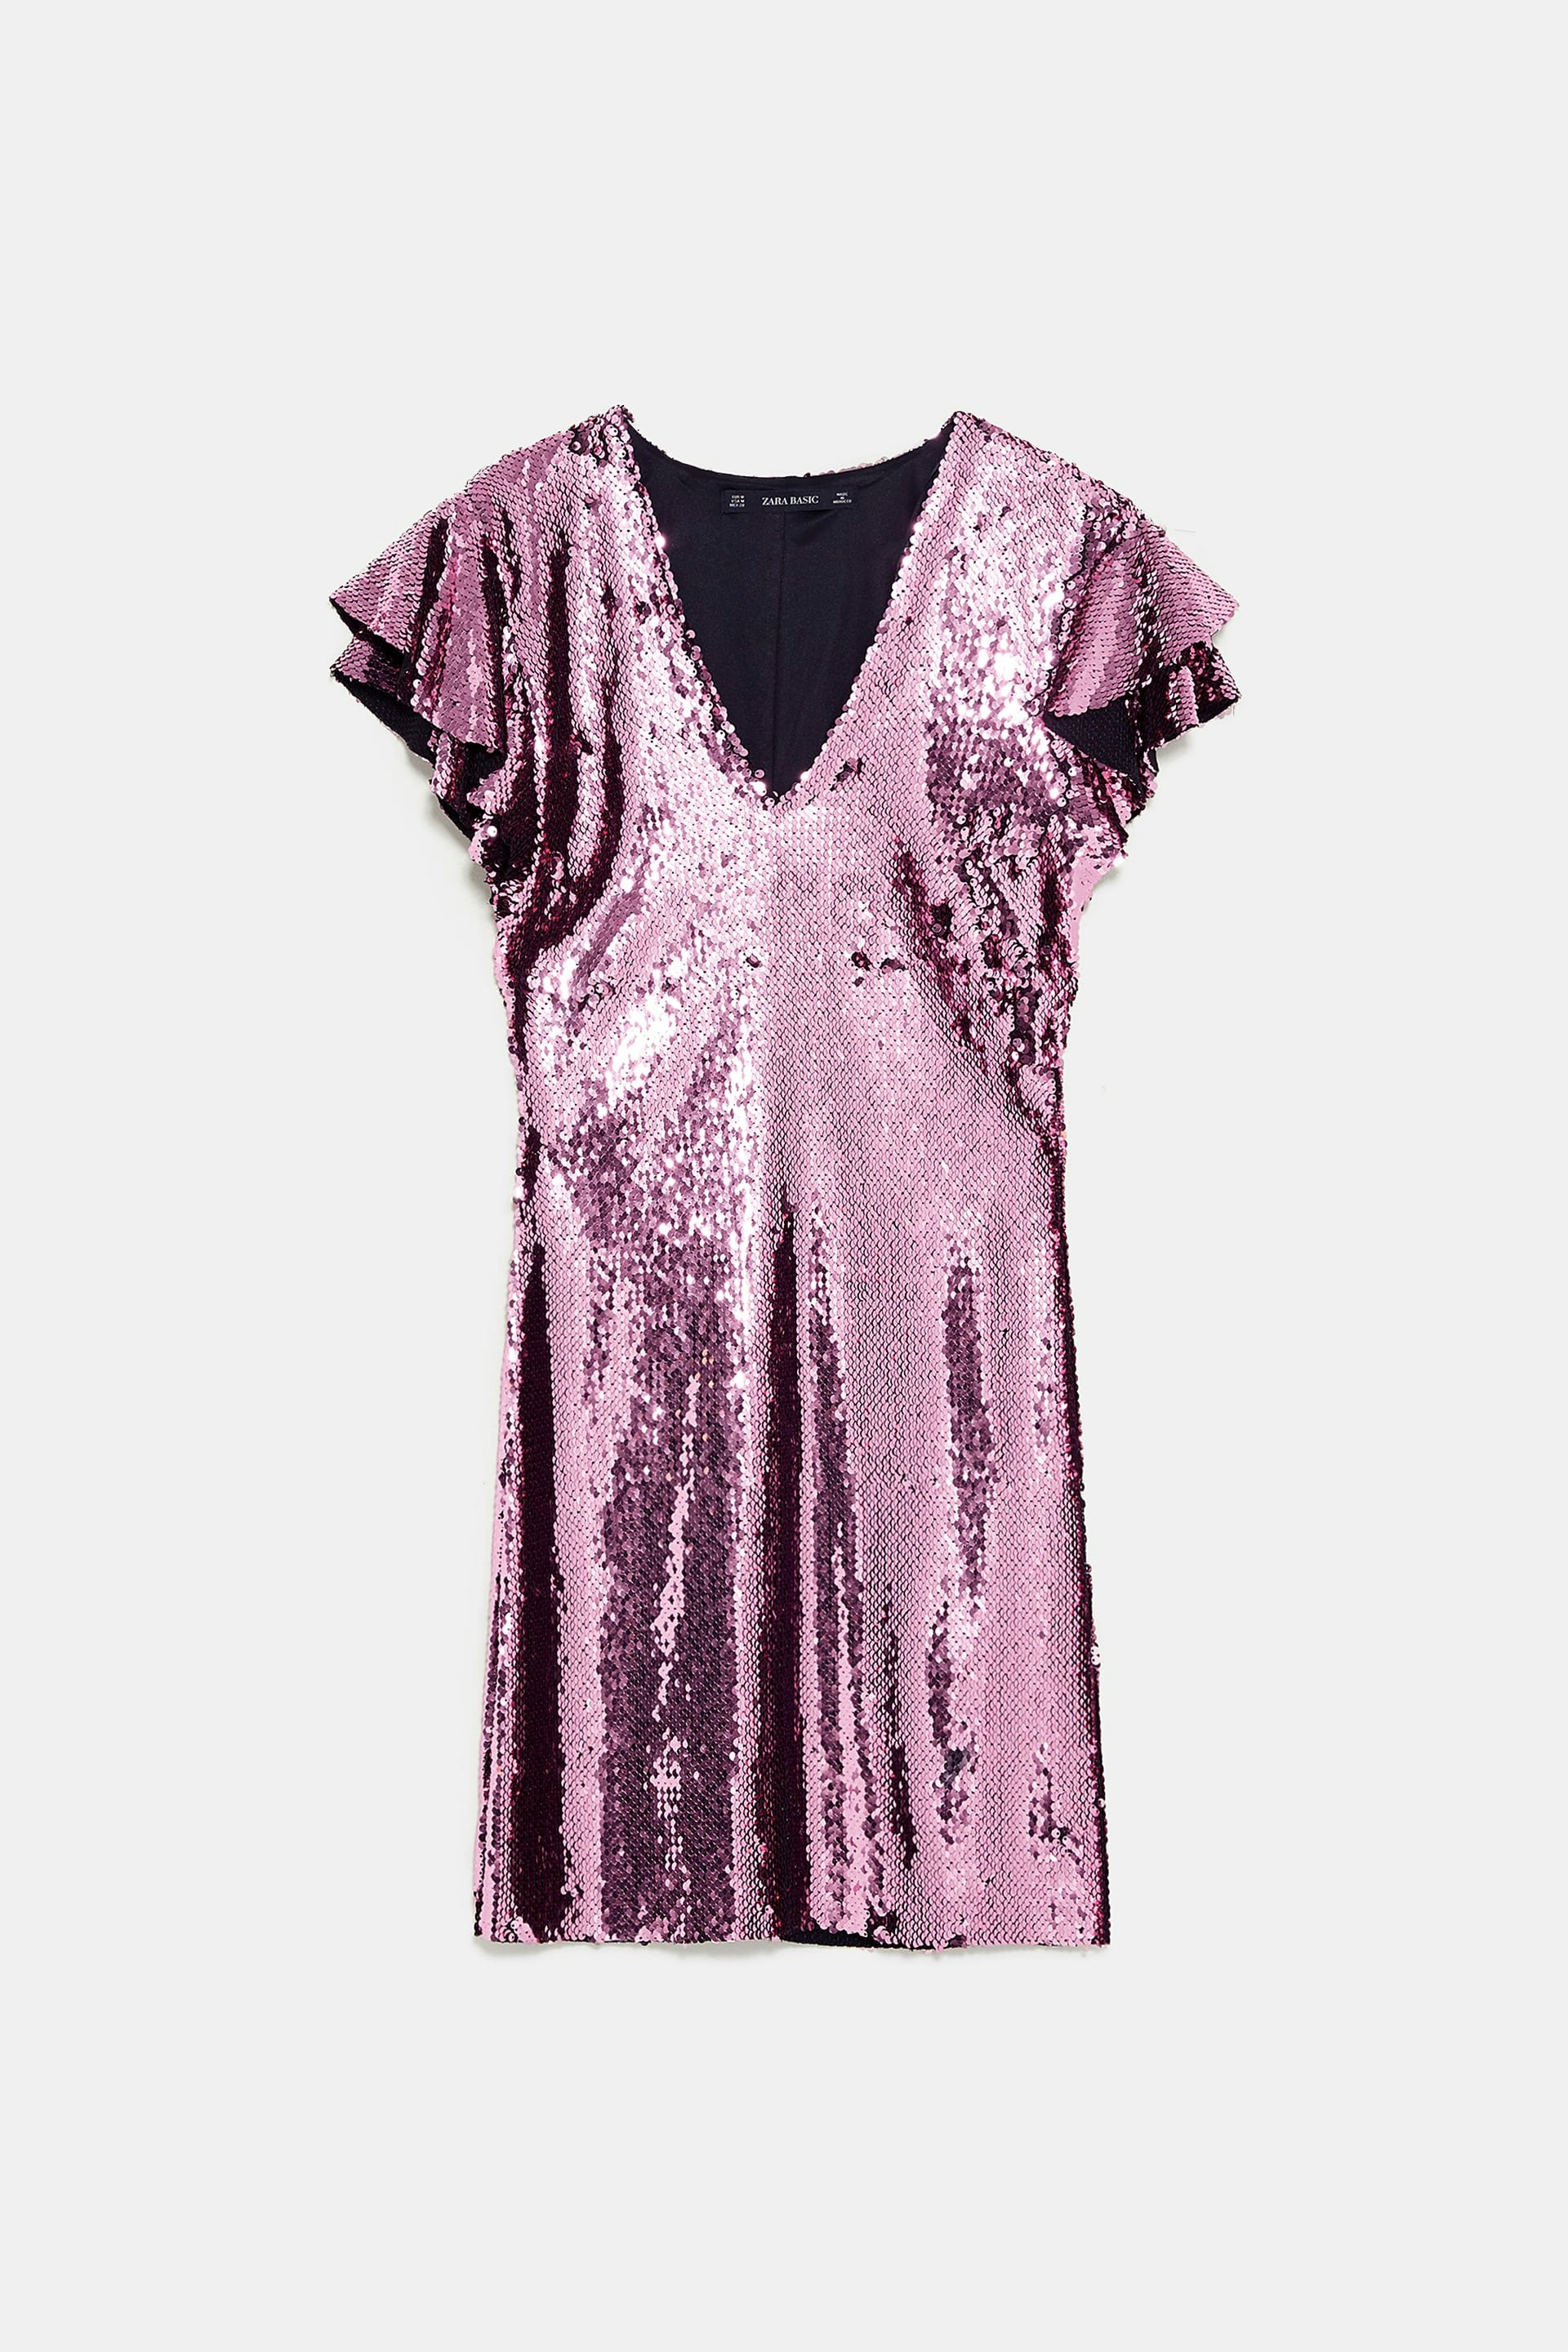 zara pink sparkly dress